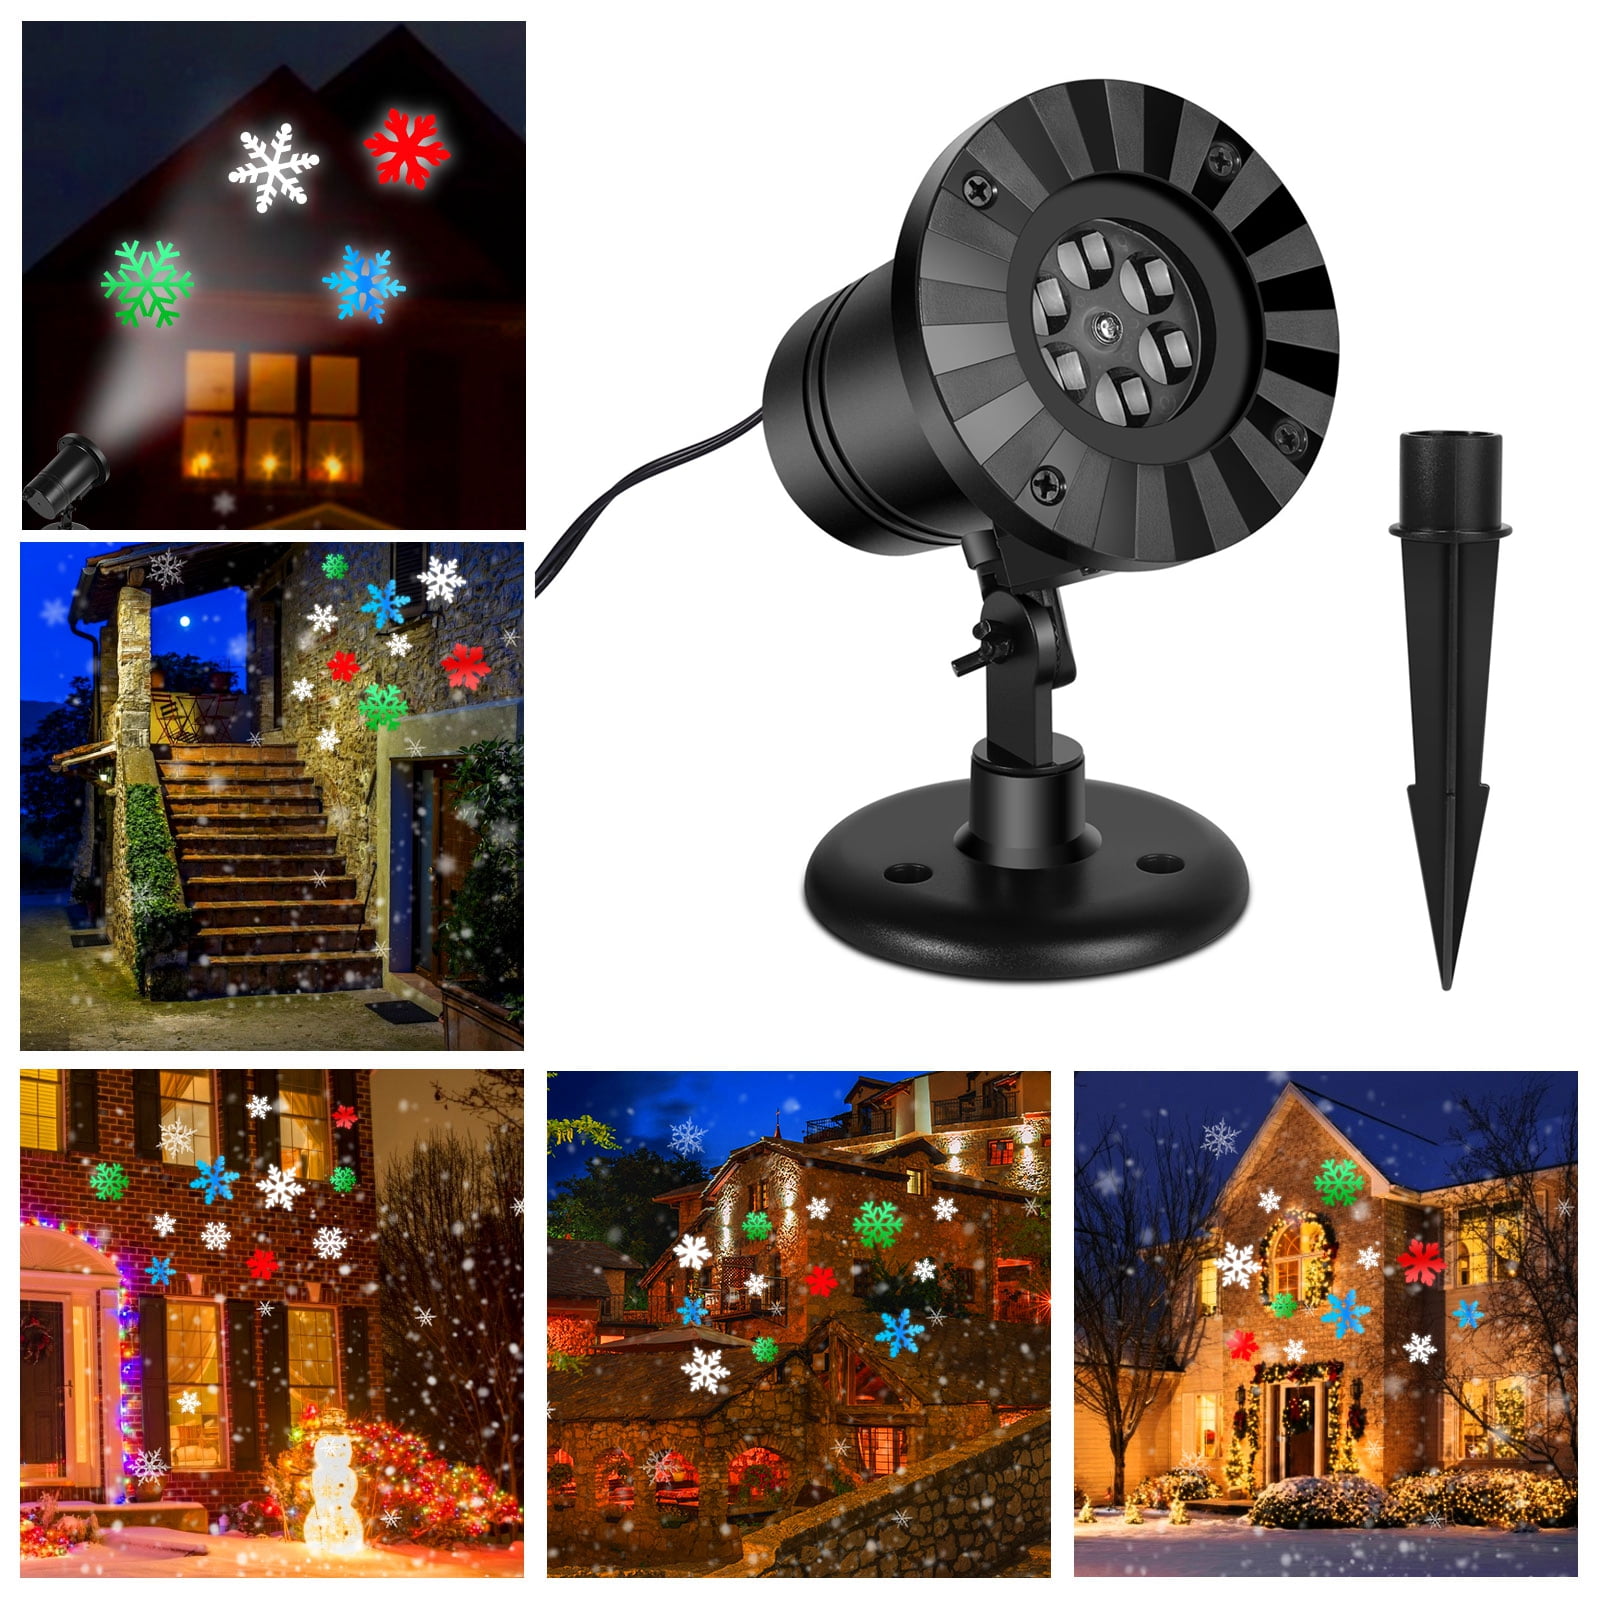 Details about   ！12 Patterns ！Christmas Light Projector LED Laser Outdoor Landscape Xmas Lamp 